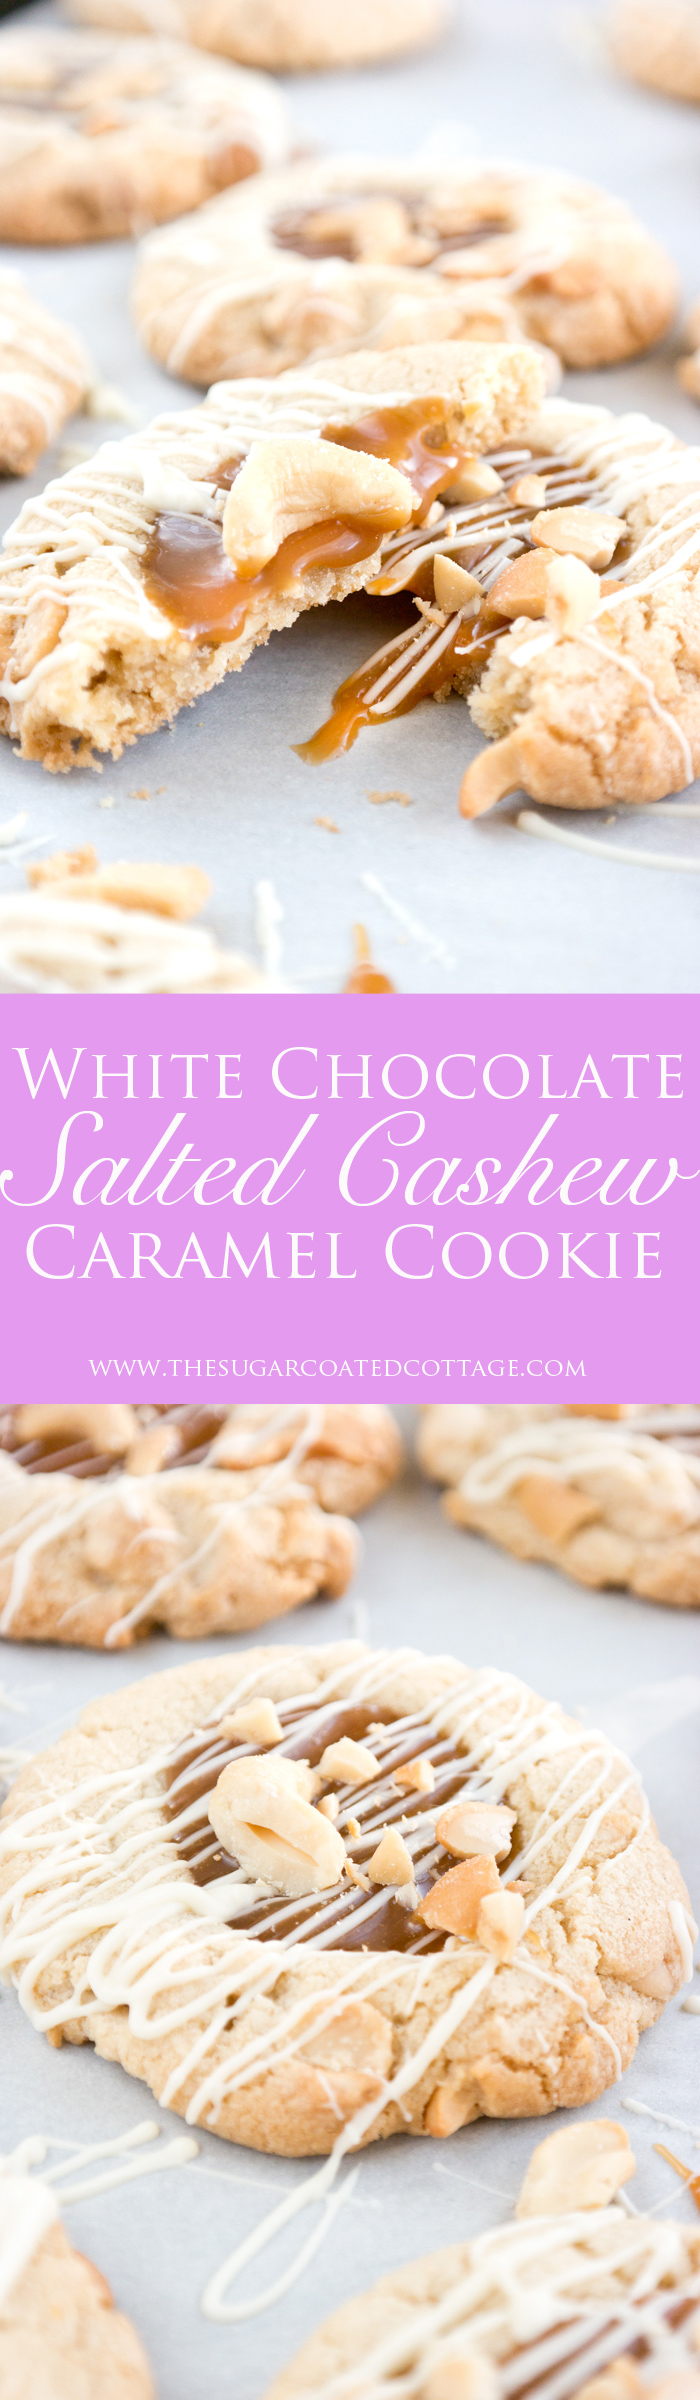 White Chocolate Salted Cashew Caramel Cookie